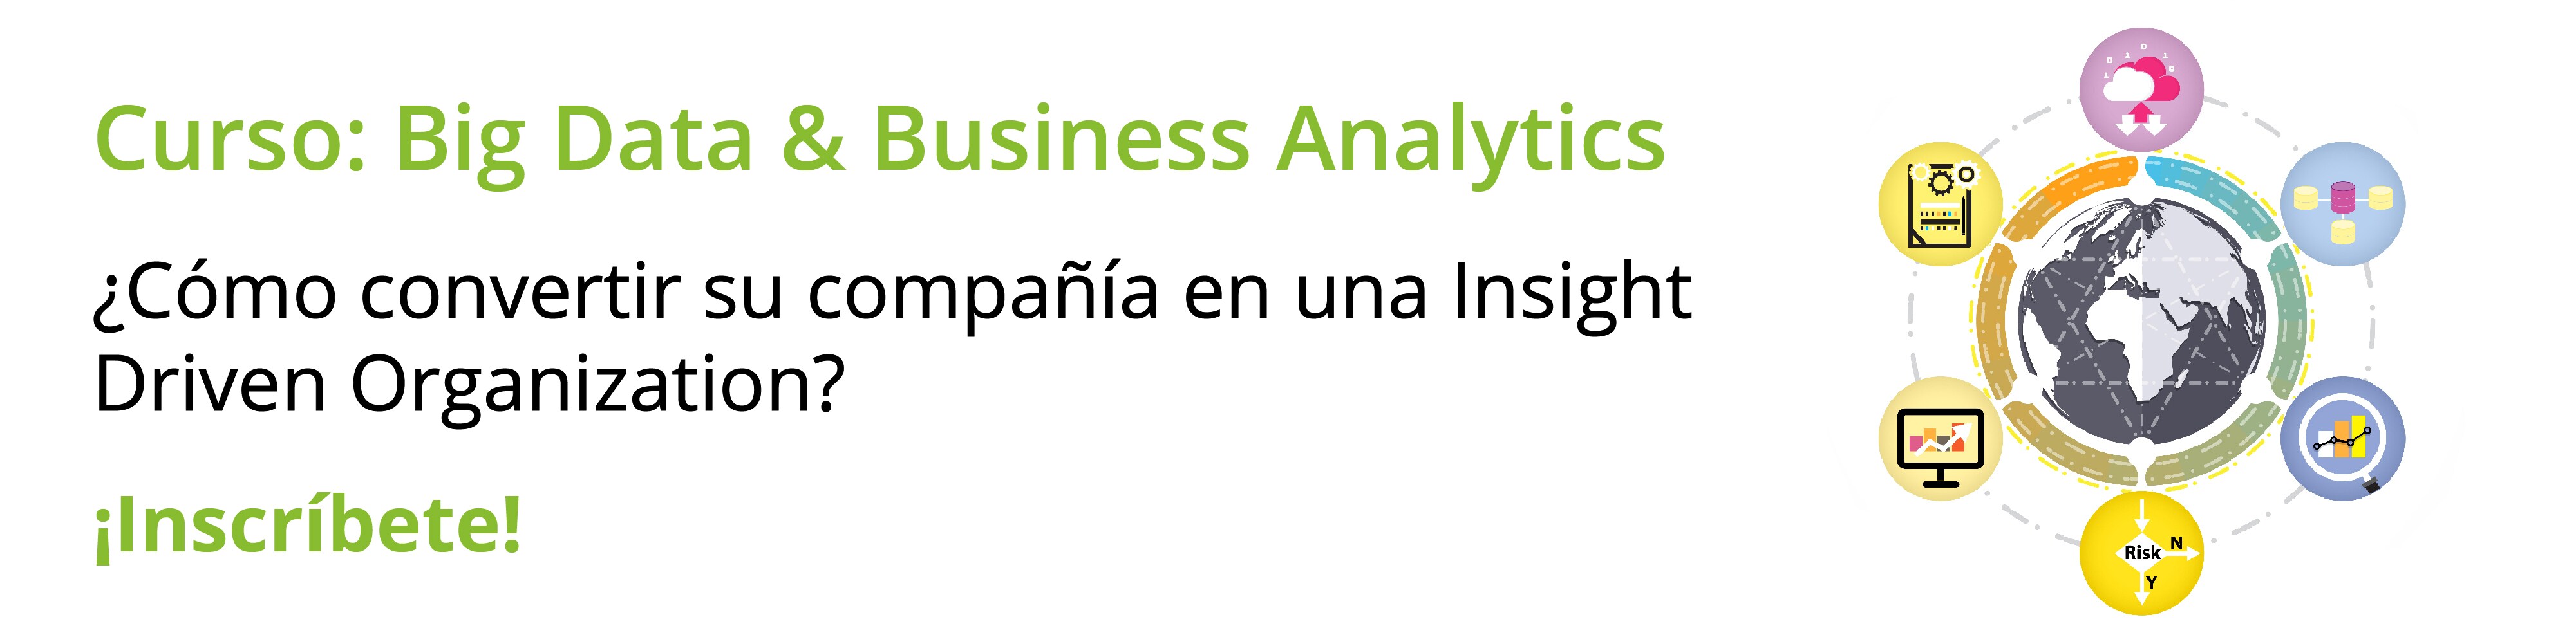 Curso Big Data & Business Analytics